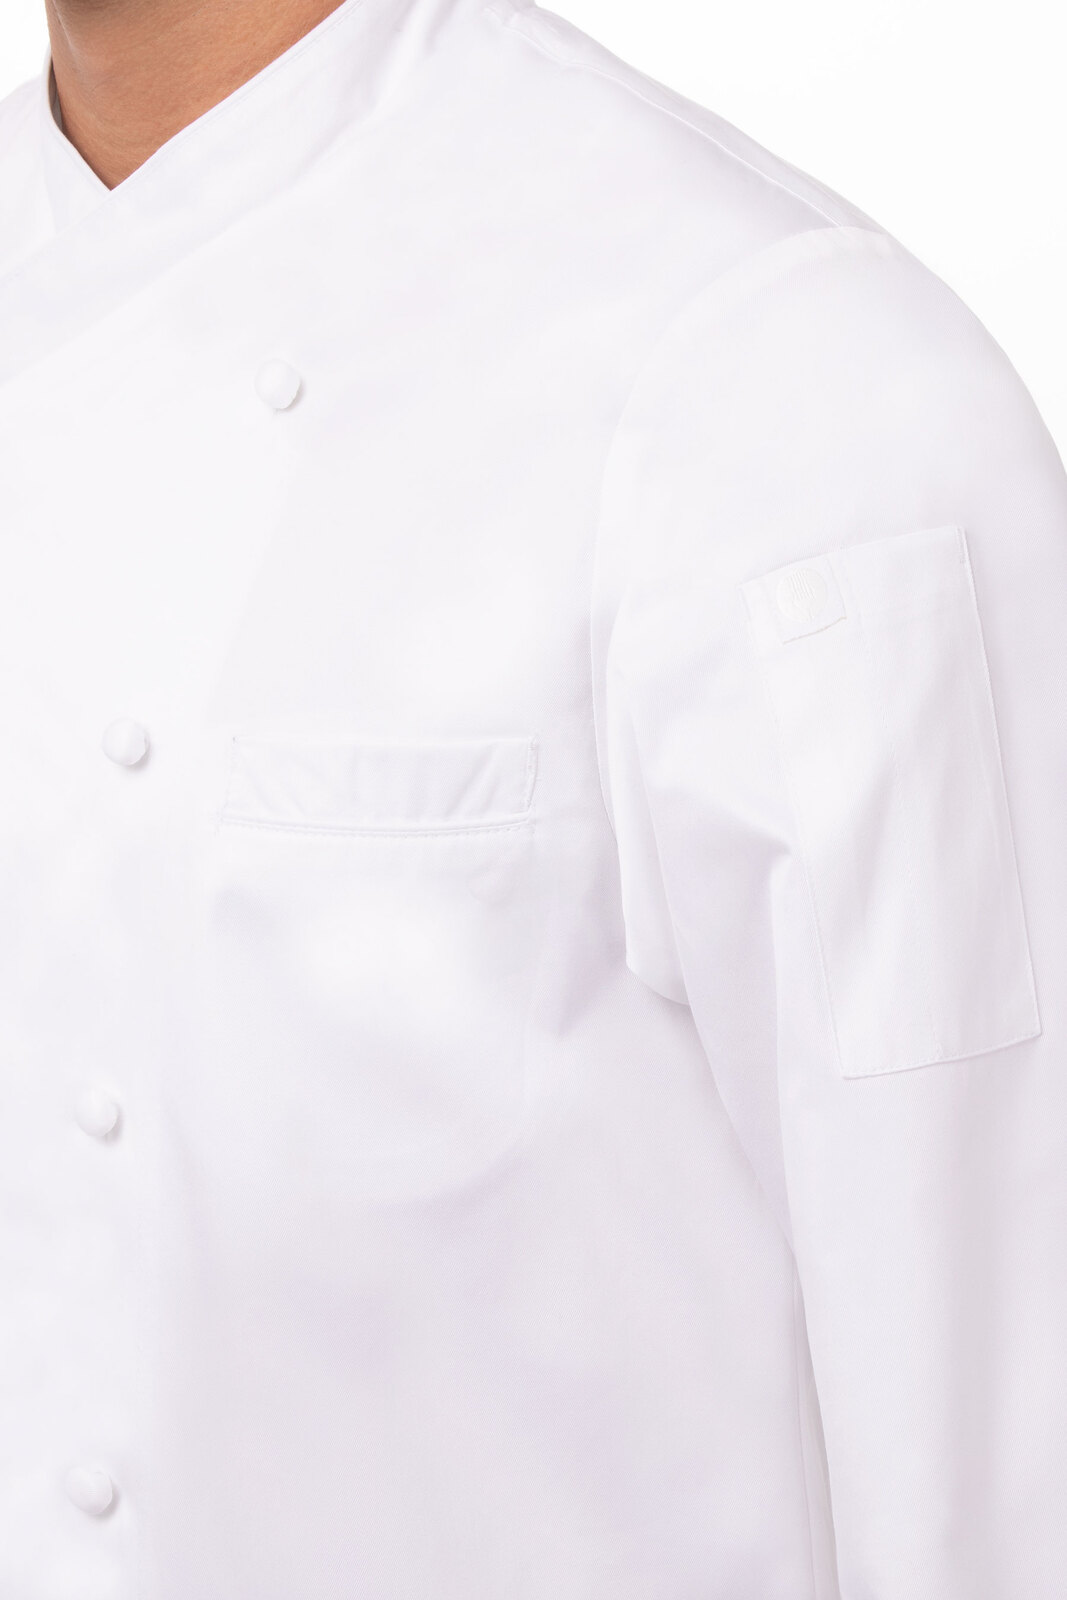 Chef Works Milan White 100% Cotton Chef Jacket